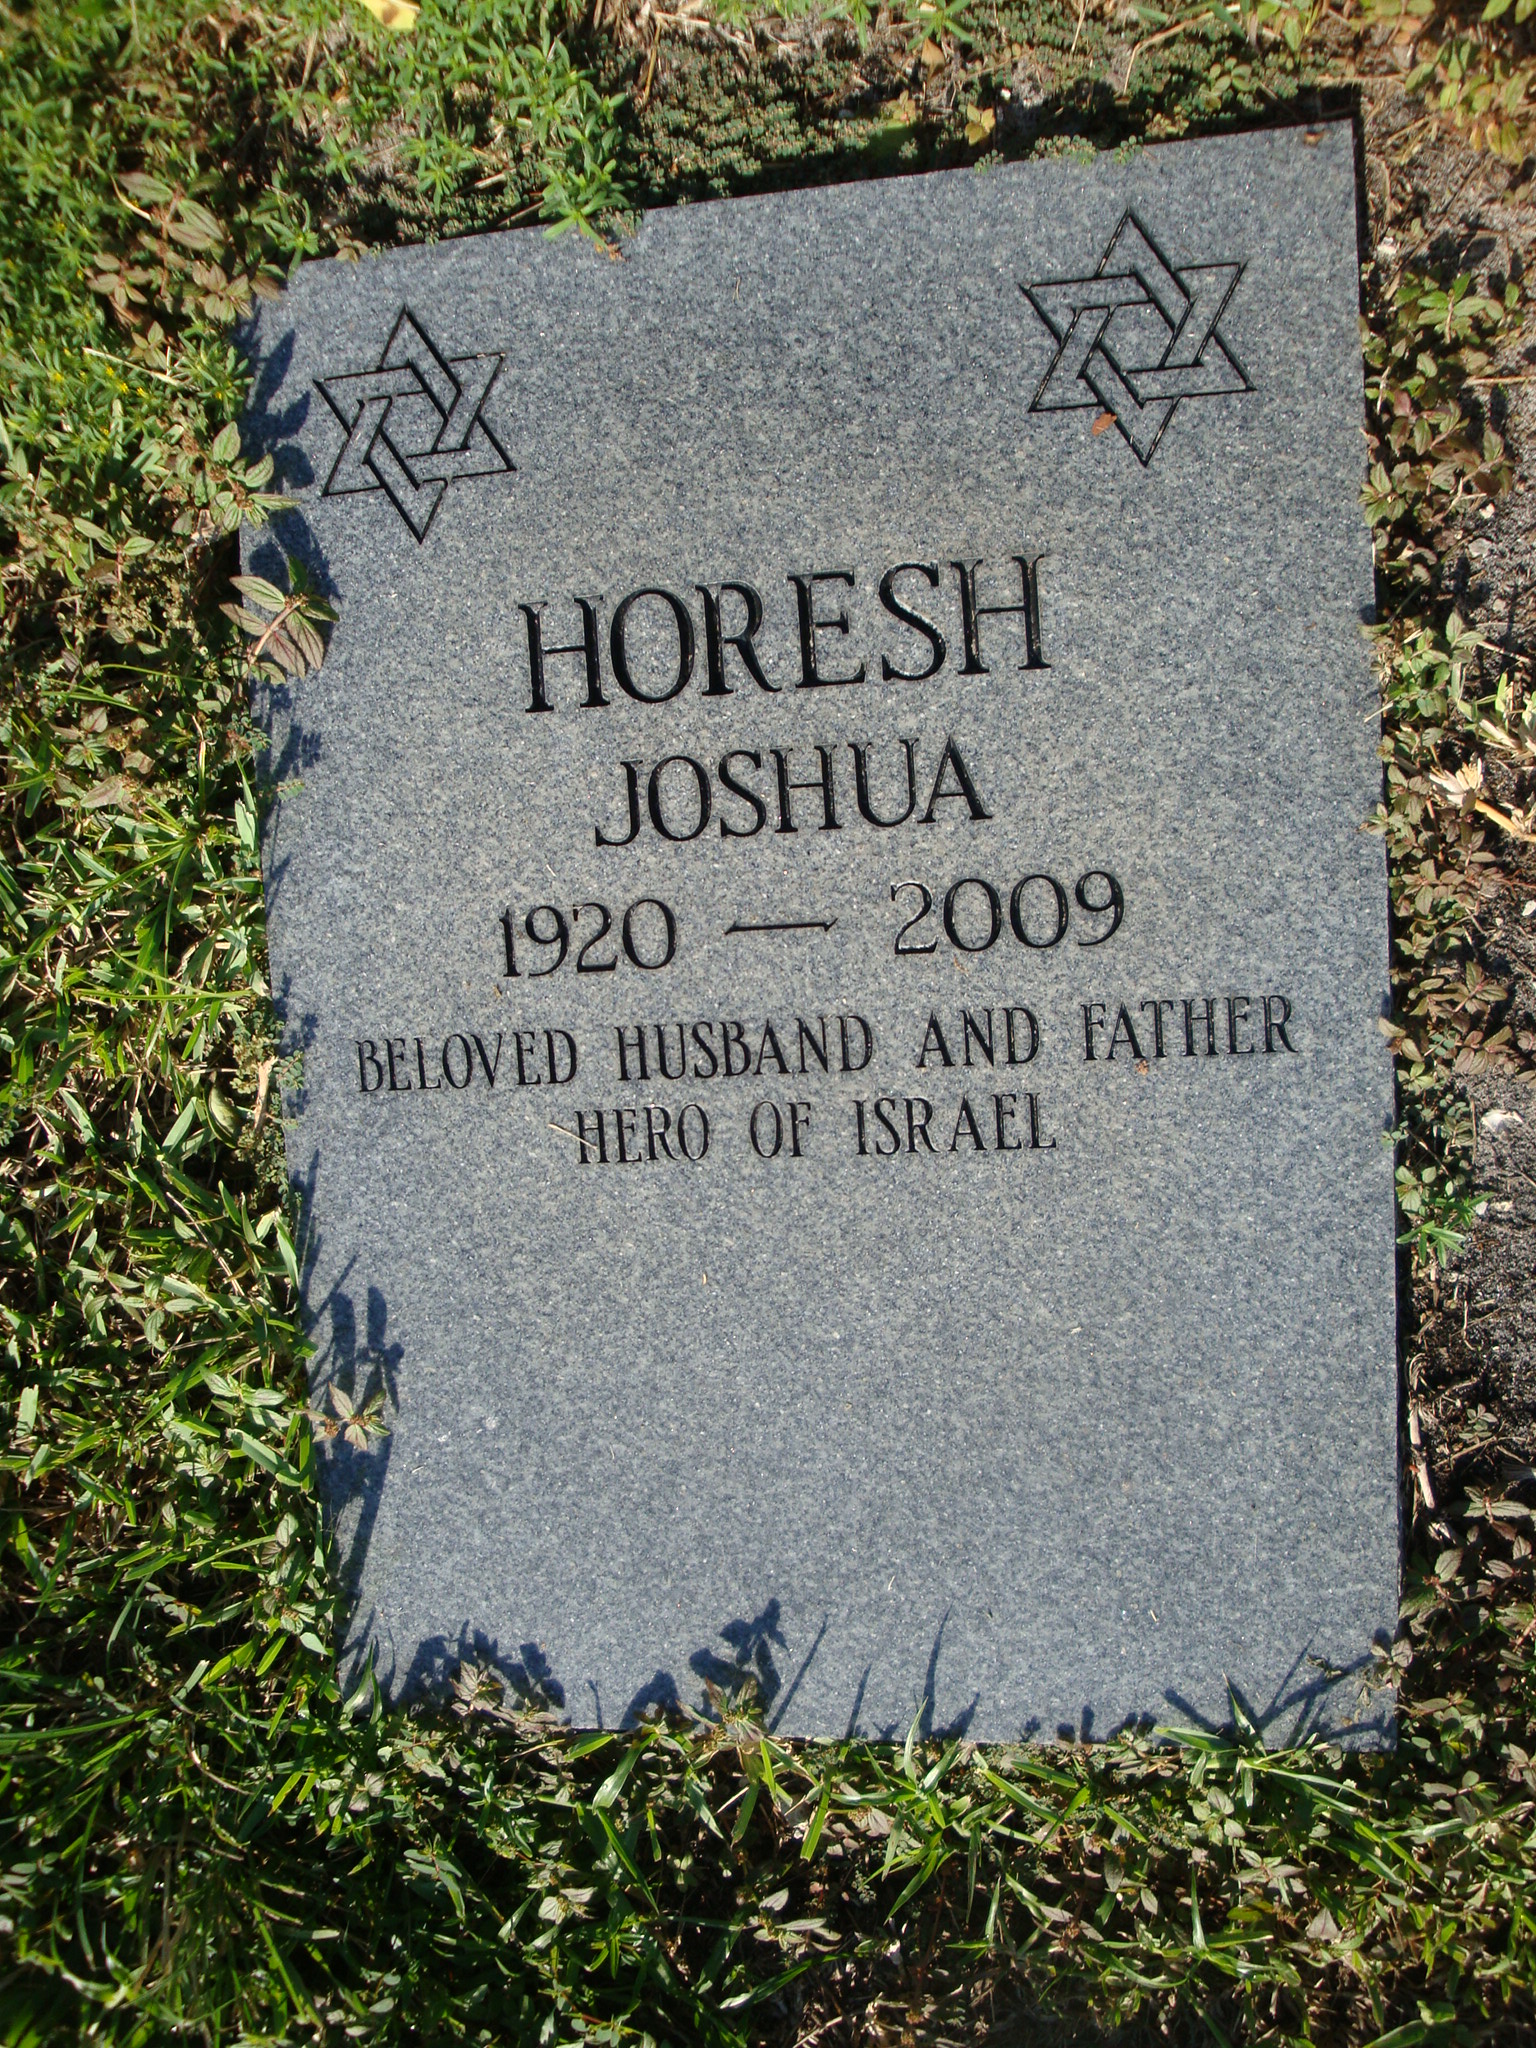 Joshua Horesh